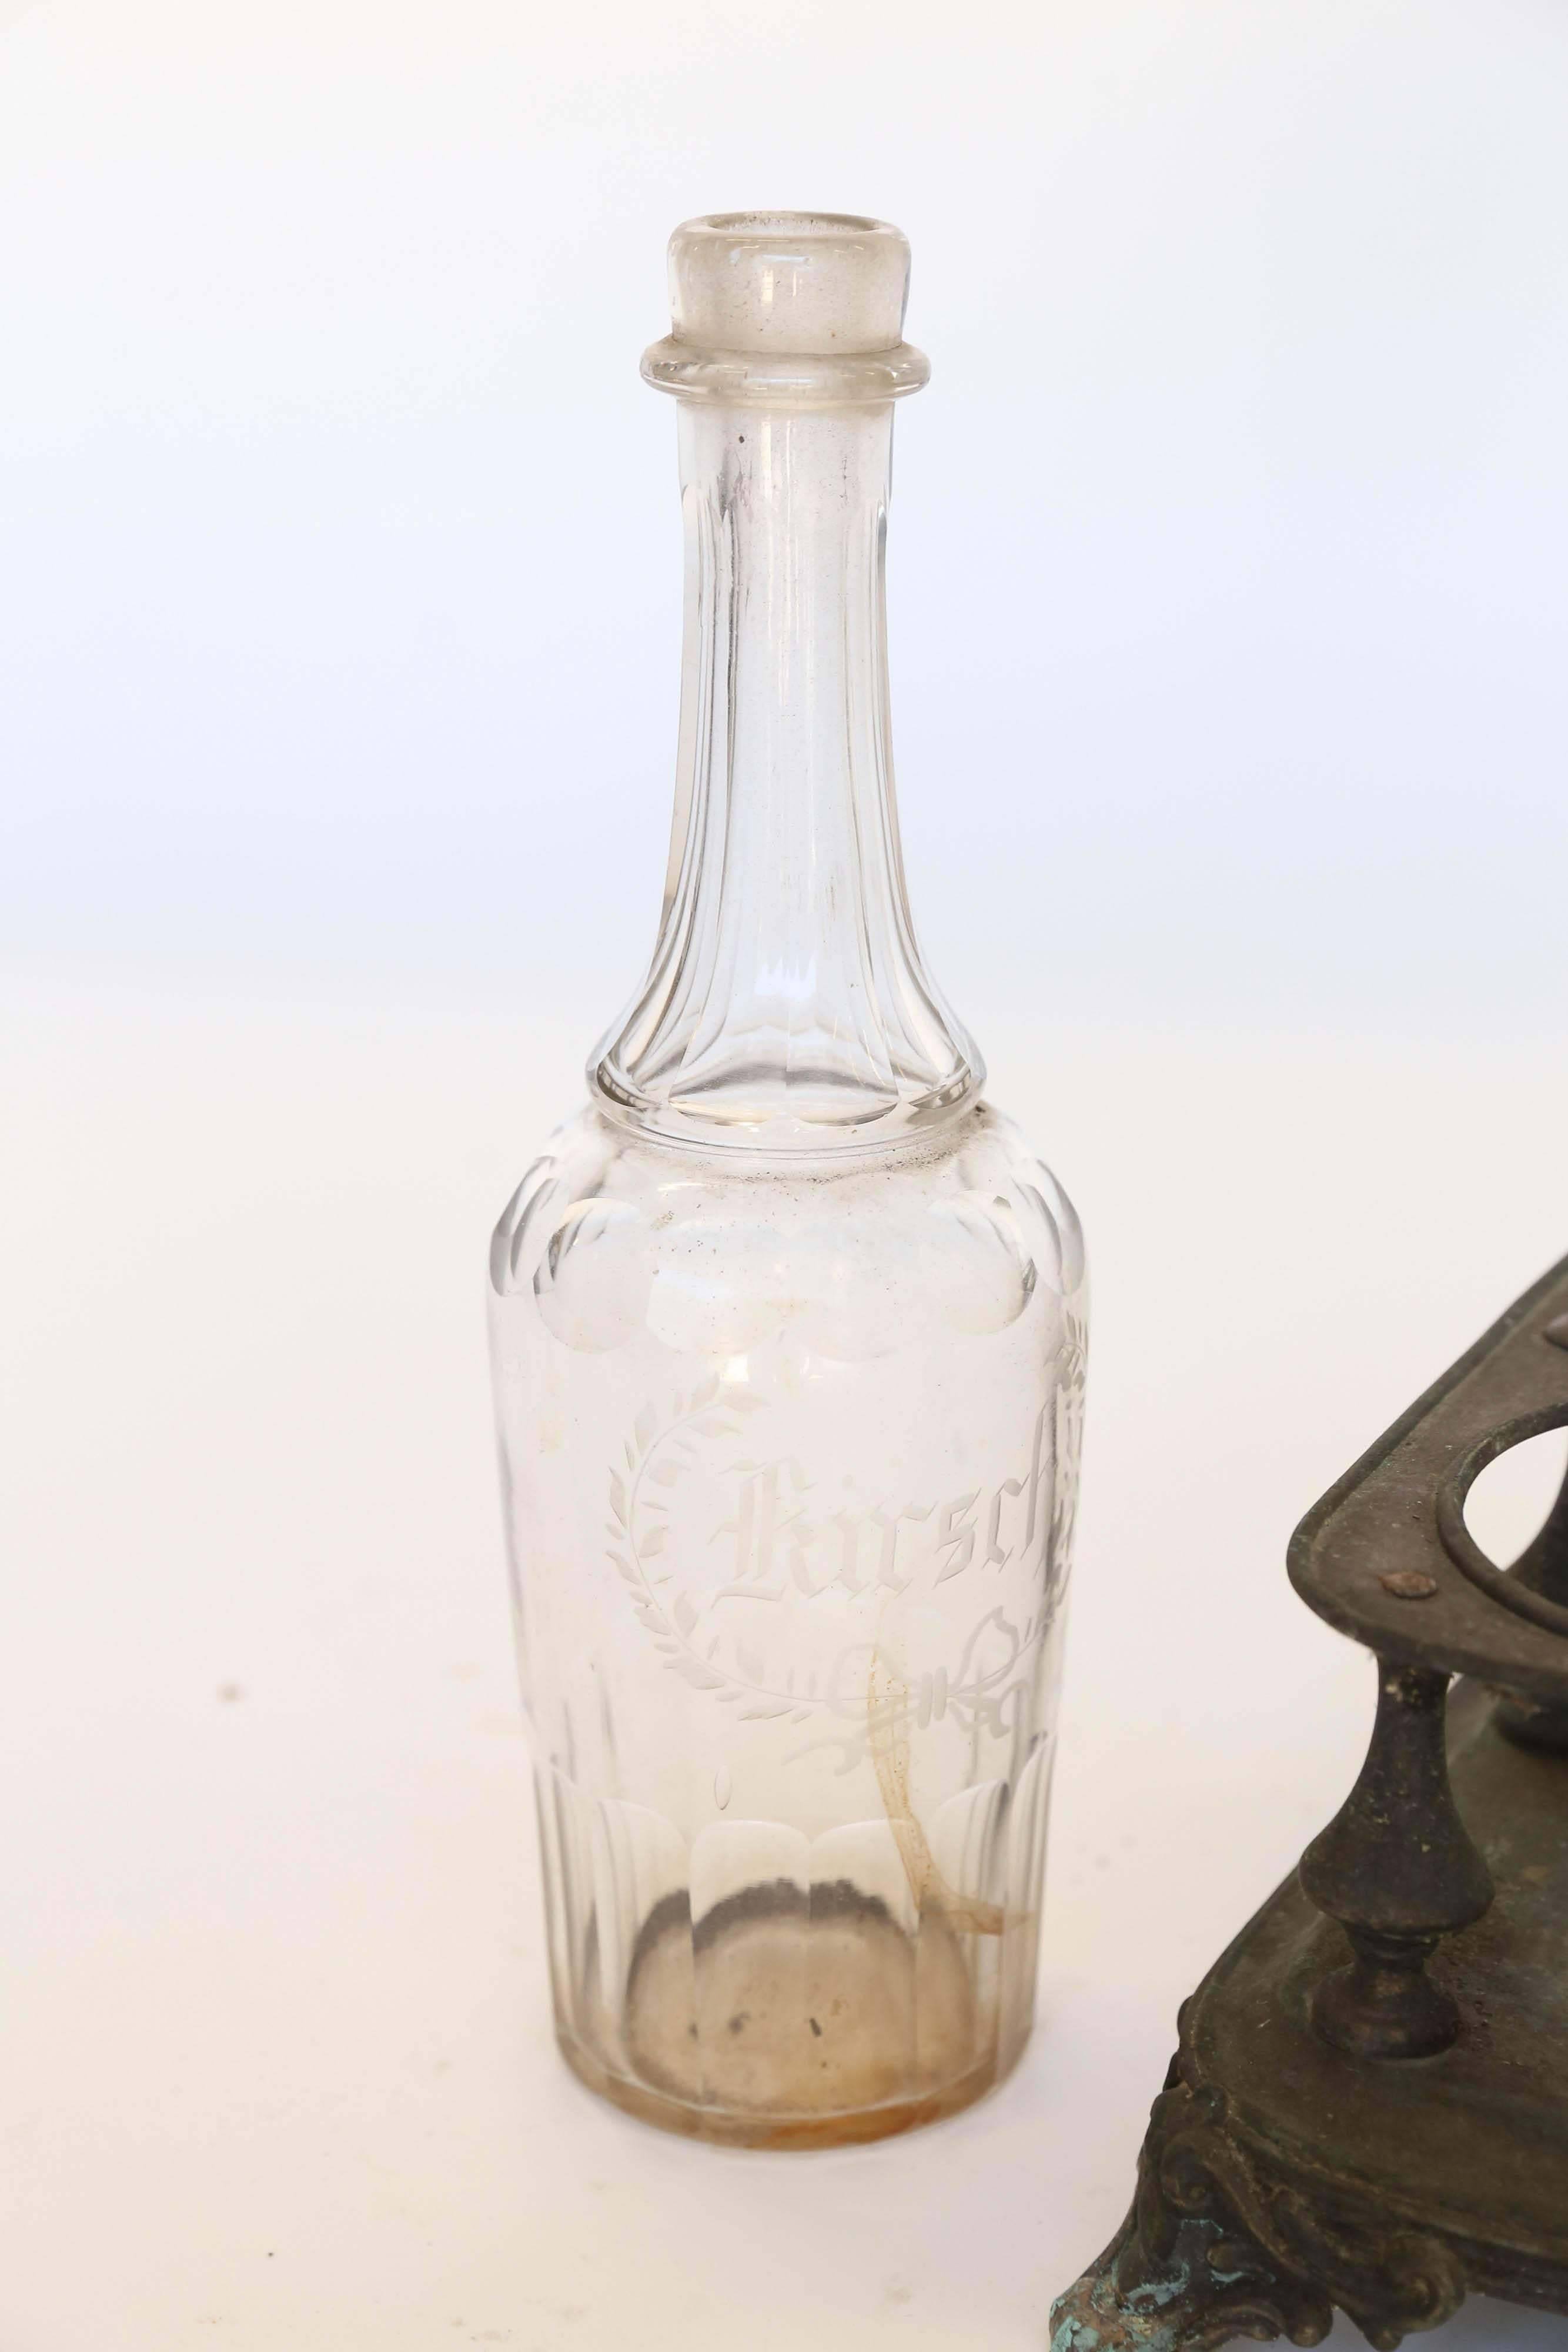 French Antique Bottle Holder with Bottles